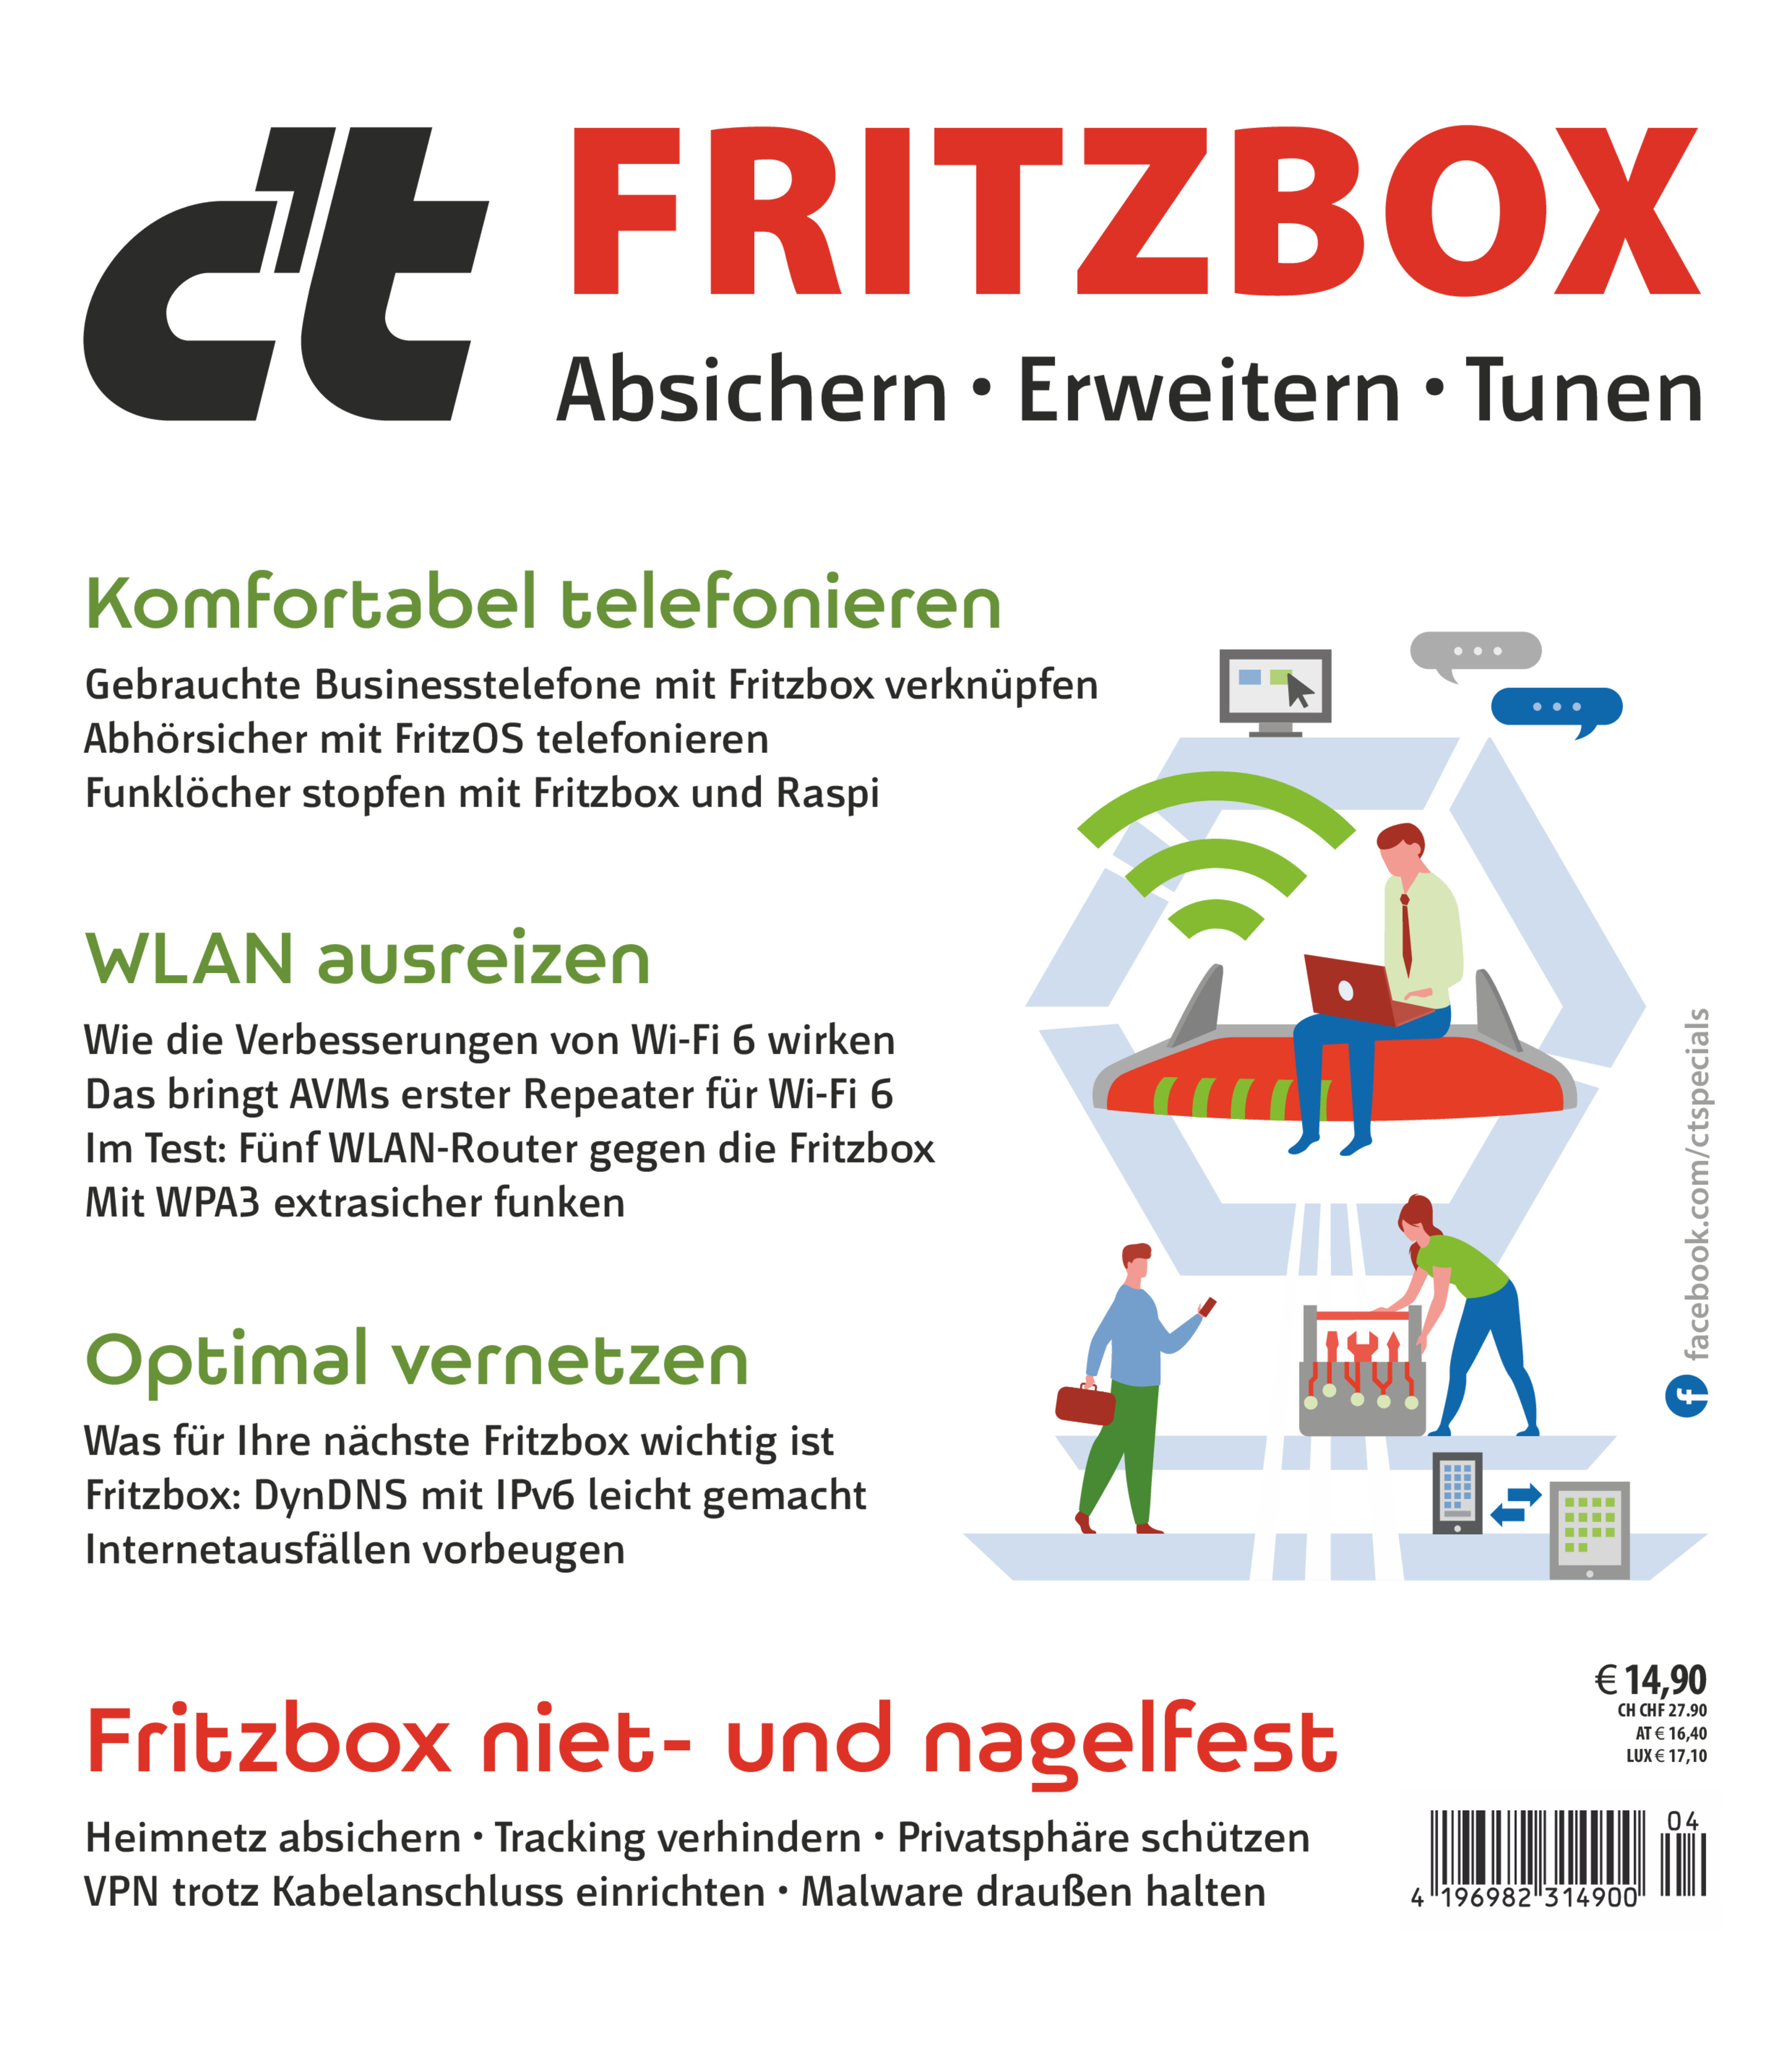 c't Fritzbox 2021